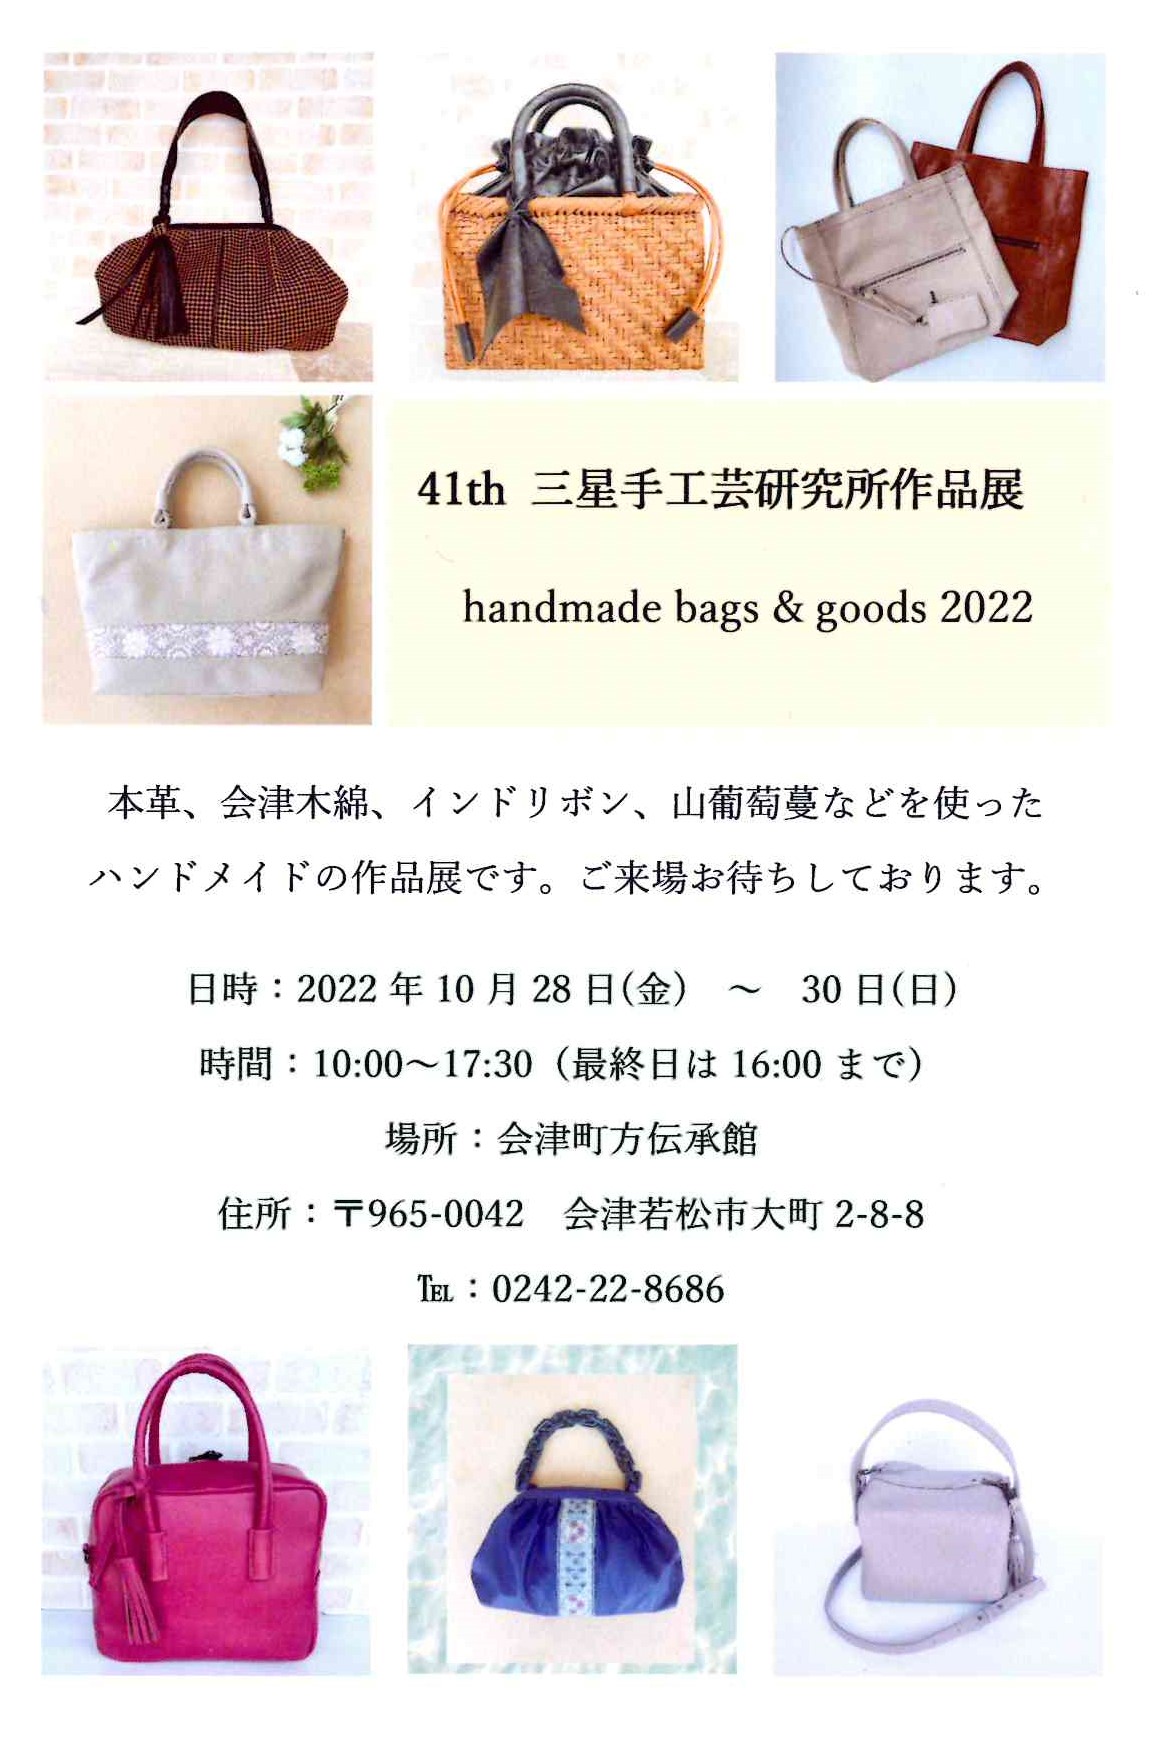 【41th 三星手工芸研究所作品展 〜handmade bags&goods 2022〜】のお知らせ